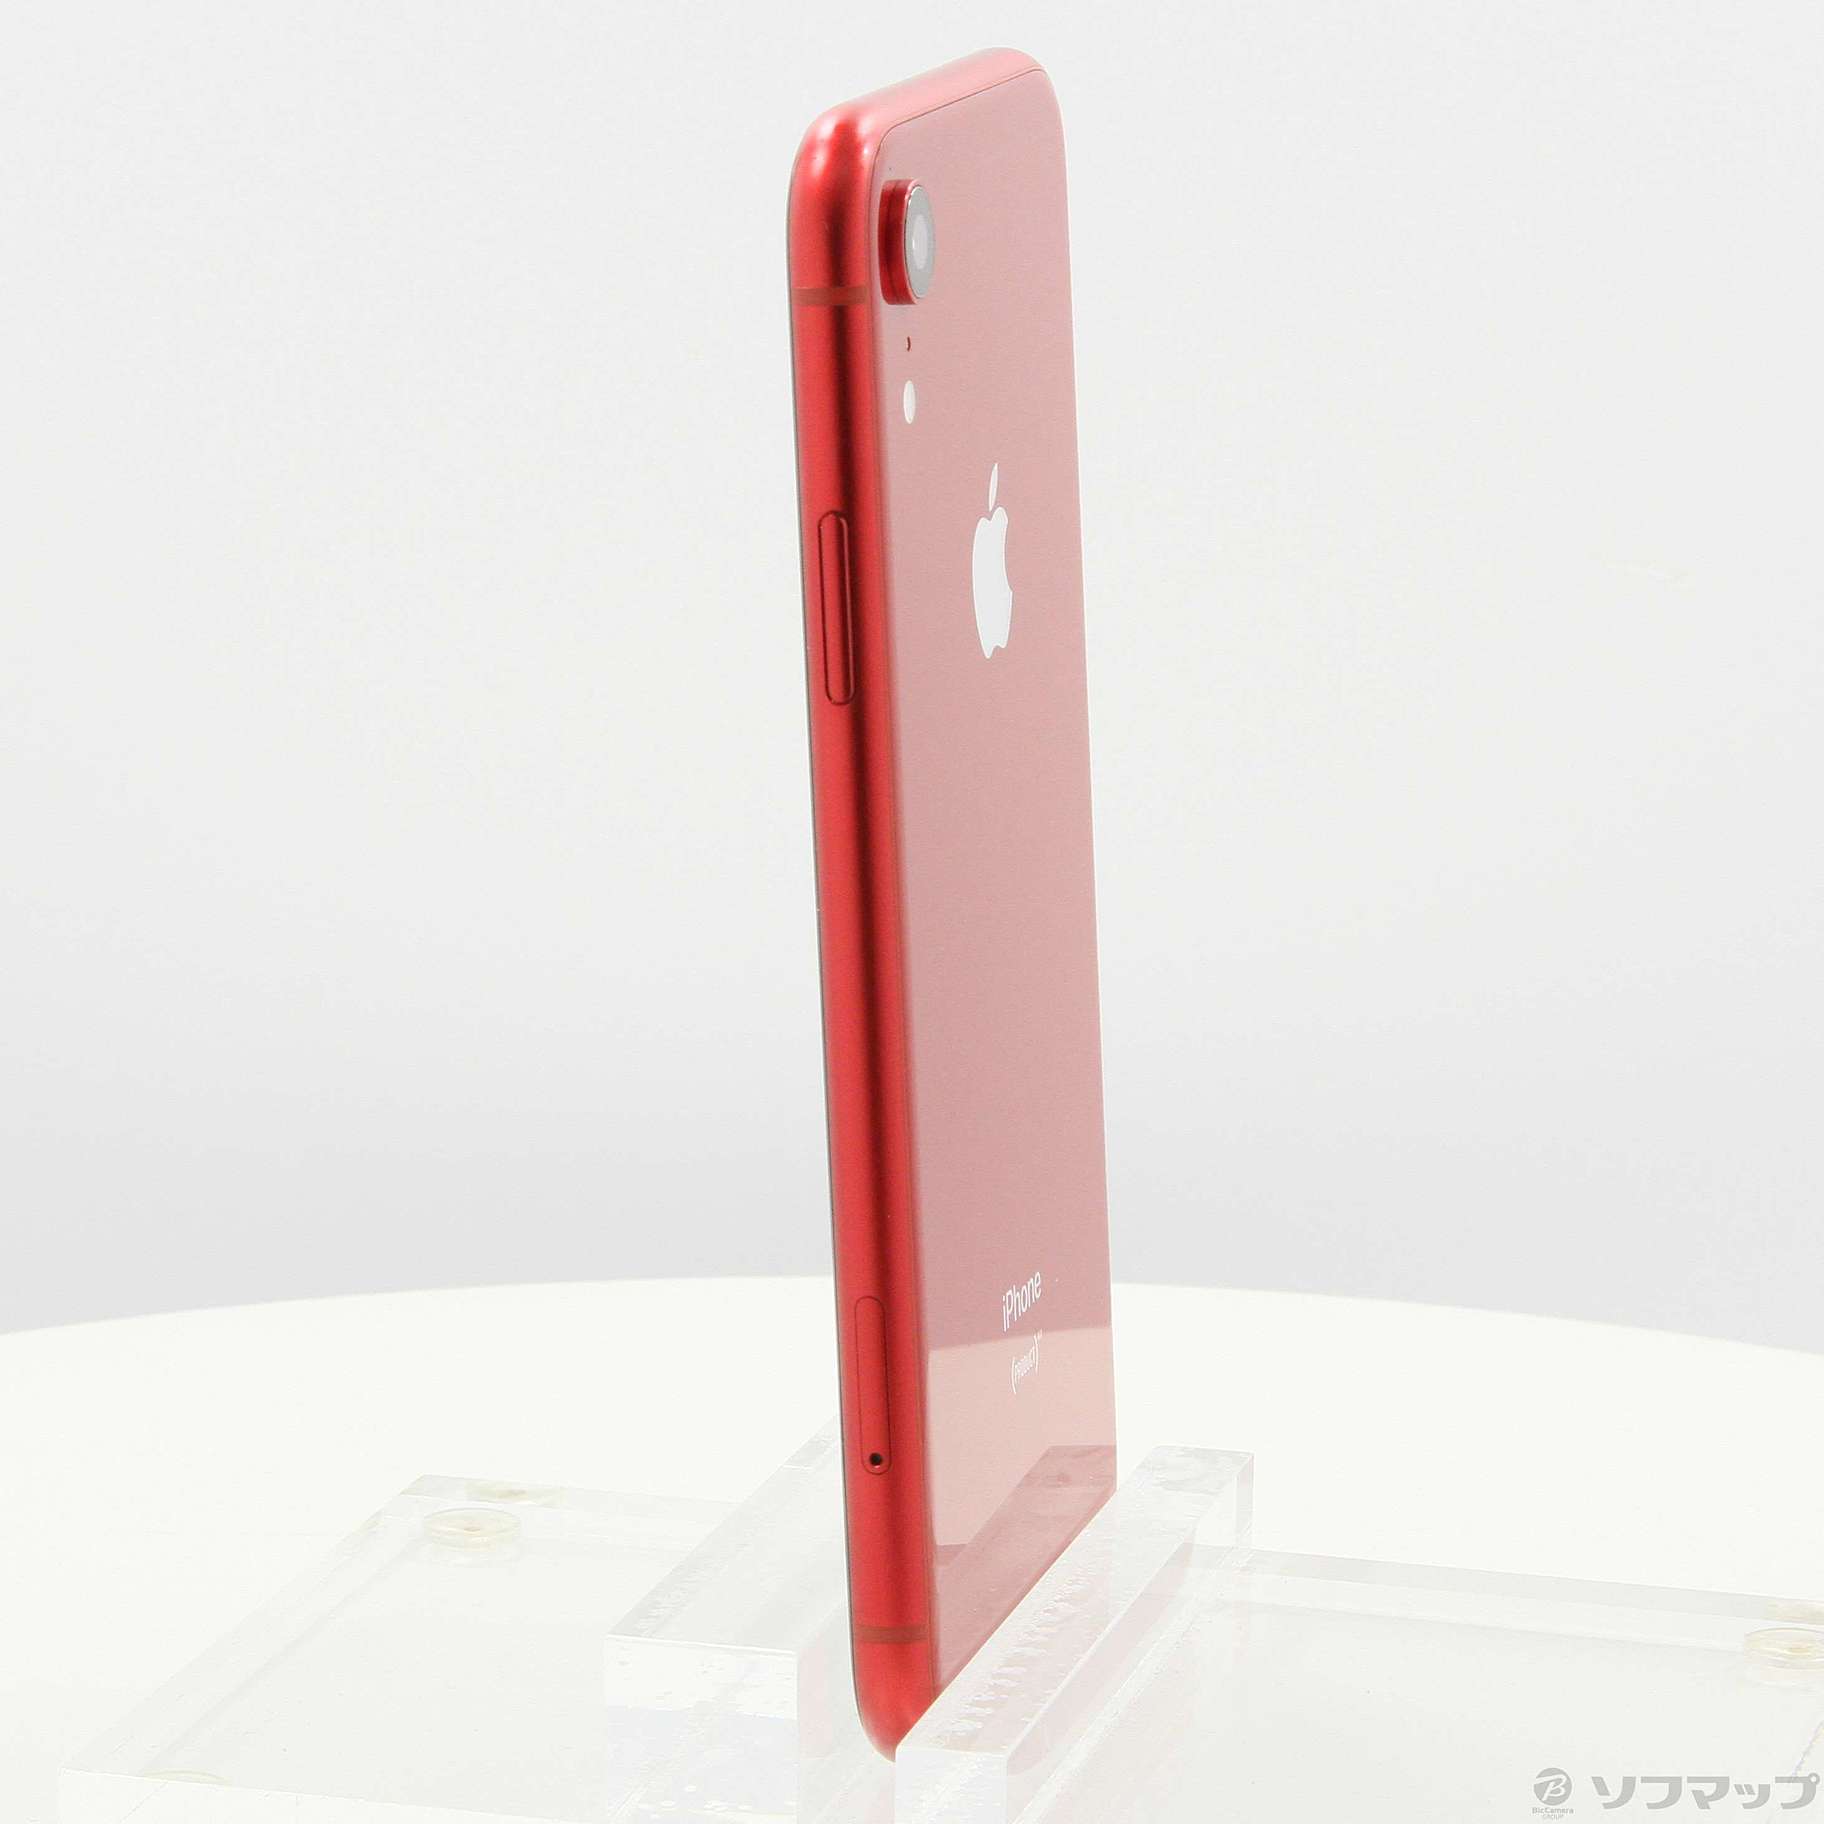 Apple iPhoneXR  128GB PRODUCT RED